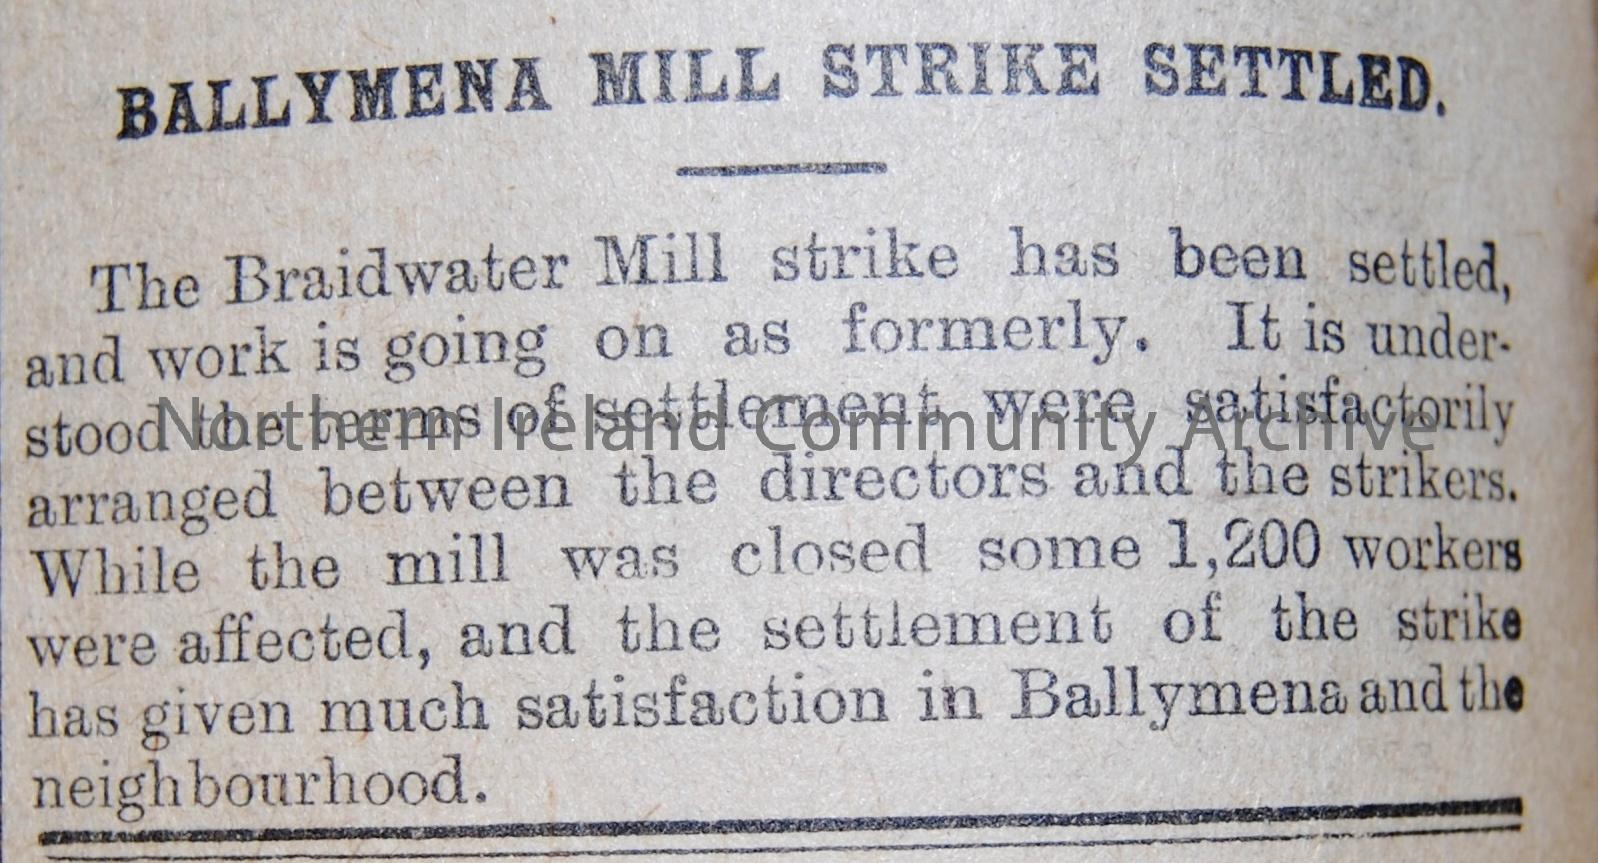 “Ballymena Mill Strike Settled”